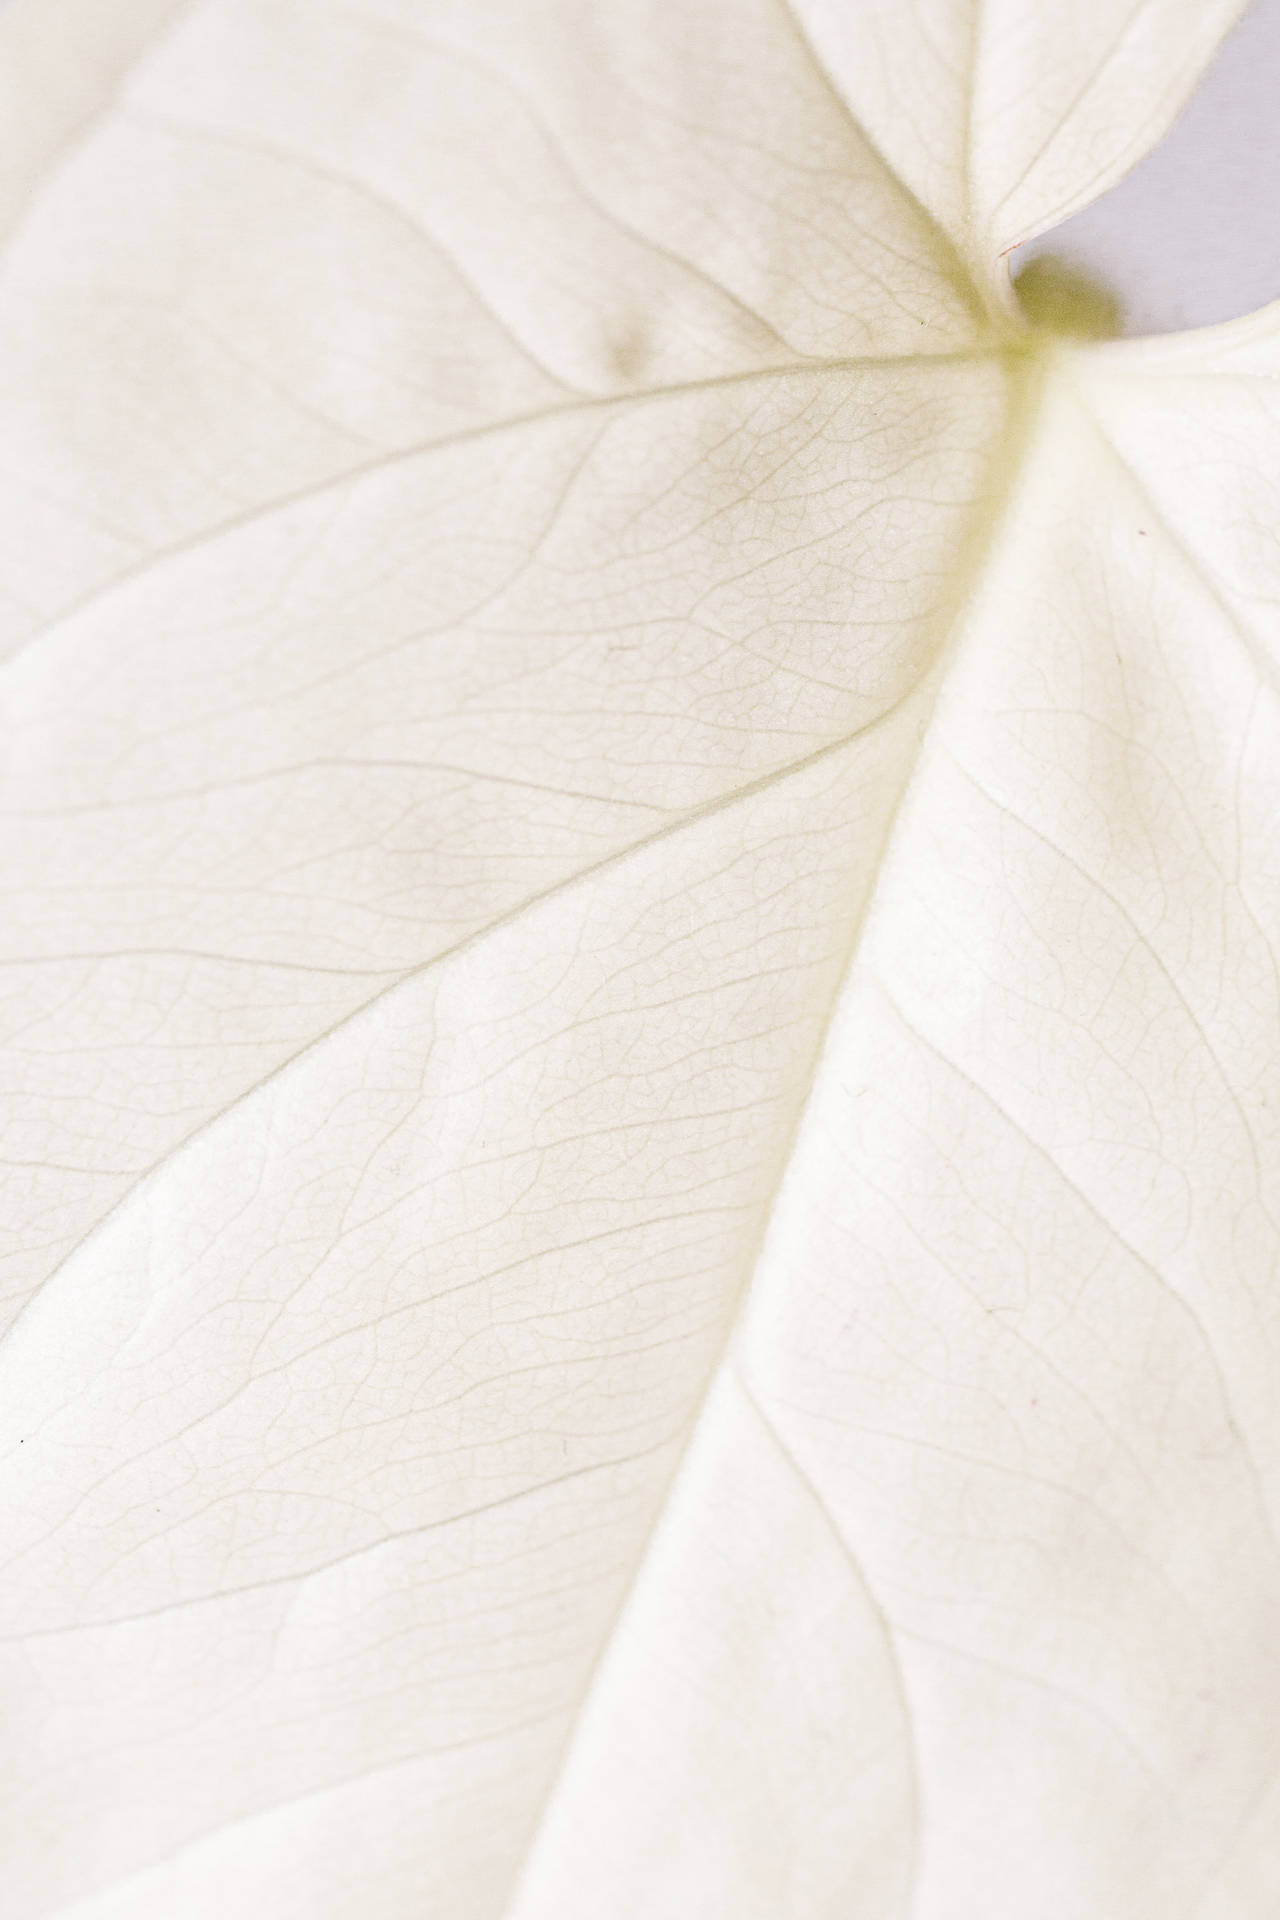 Pure White Leaf Background